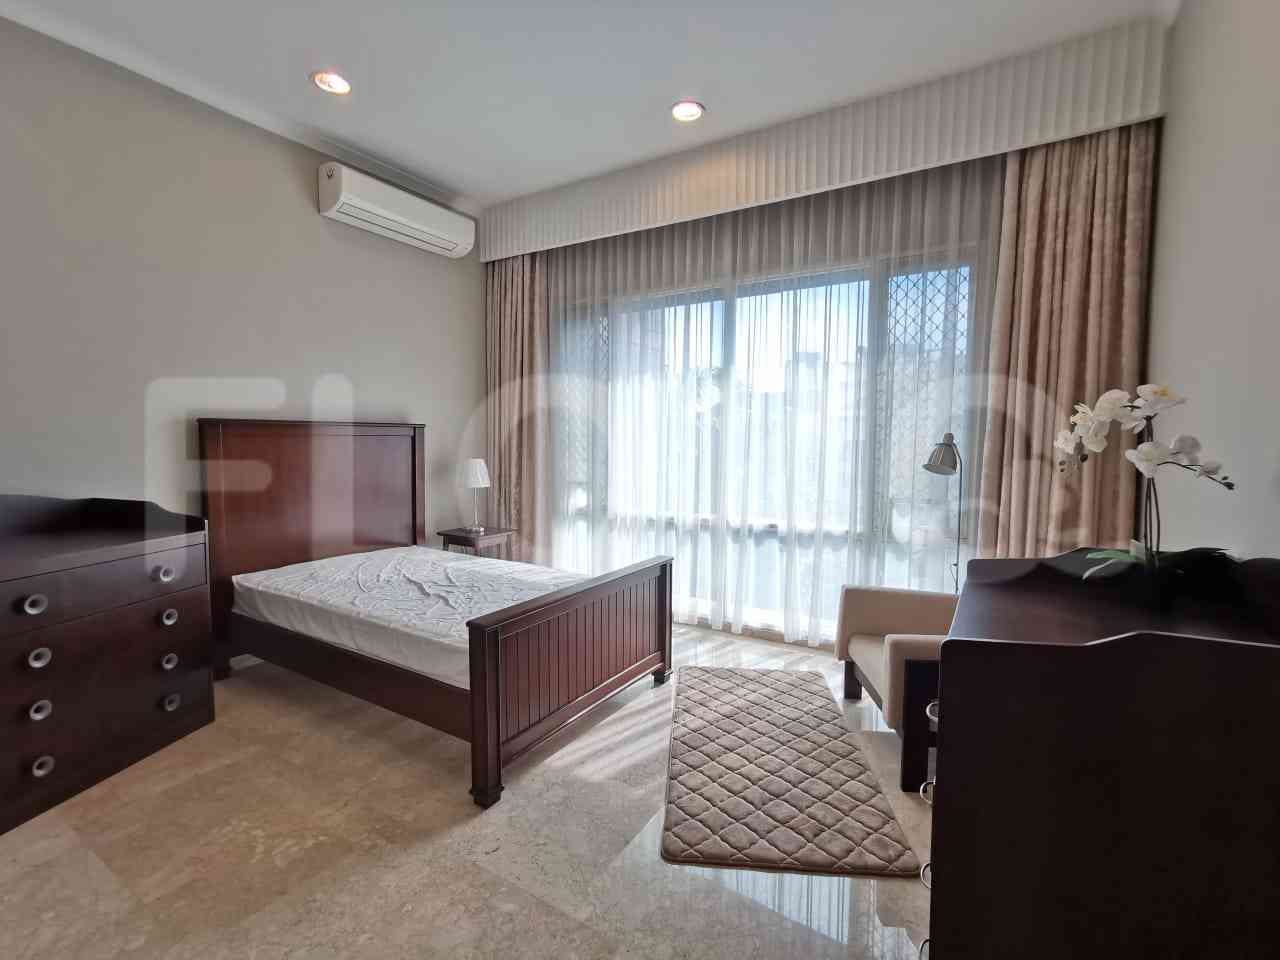 3 Bedroom on 2nd Floor for Rent in Senayan Residence - fsec05 7